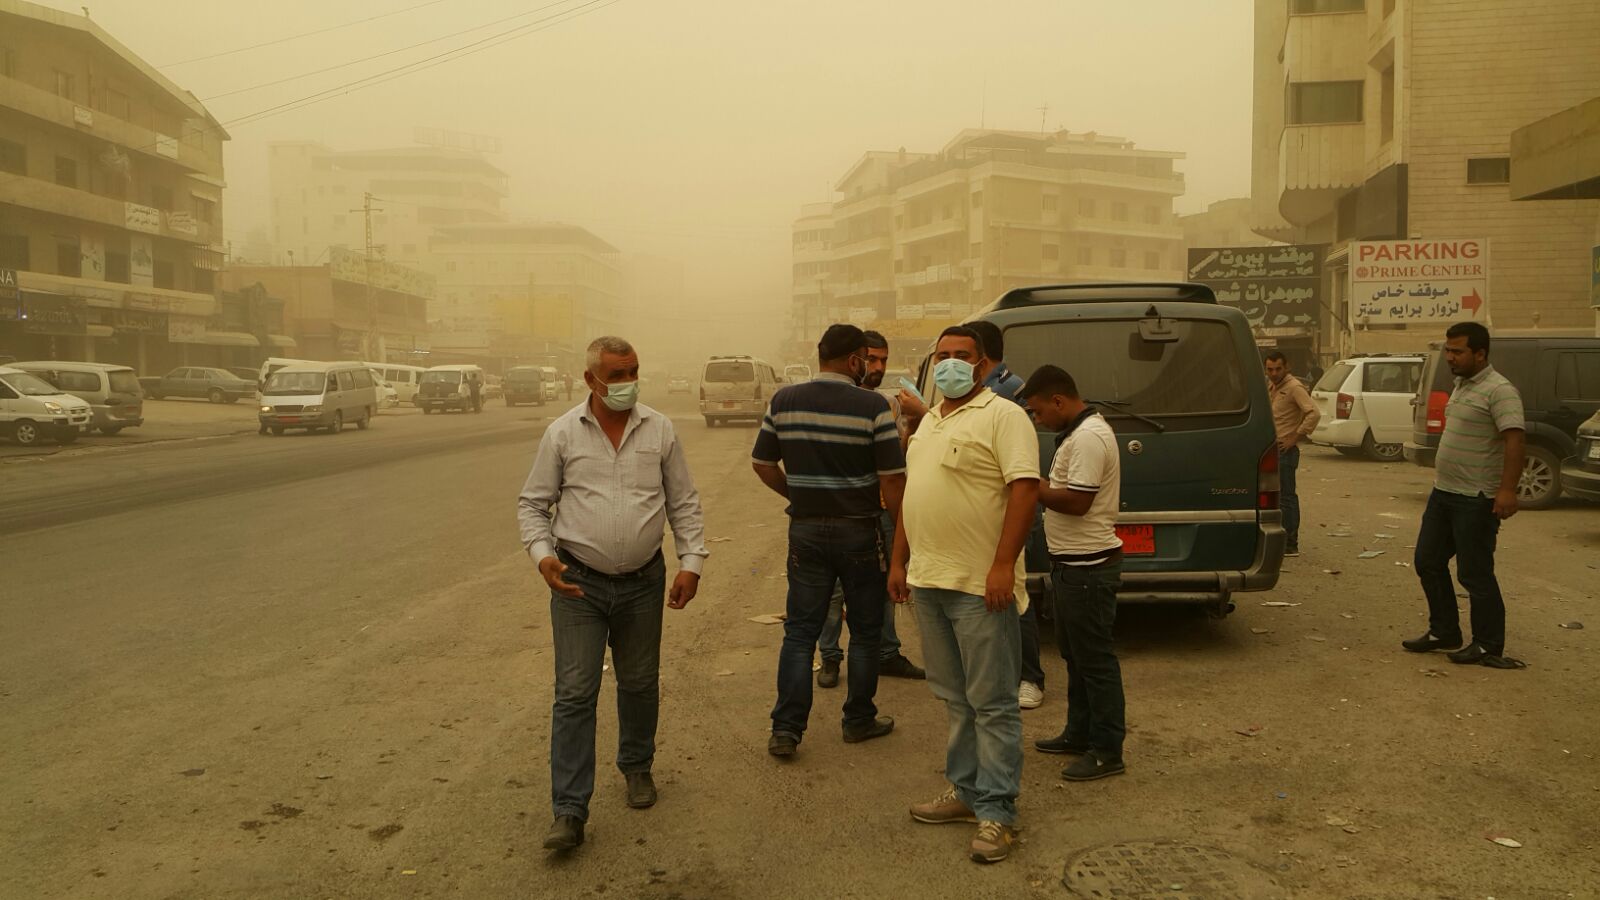 sandstorm lebanon, apocalyptical sandstorm lebanon, sandstorm lebanon kills 2 and hospitalize 170, 2 killed and 170 hospitalized after sandstorm in lebanon, unprecedent sandstorm lebanon, apocalyptic sandstorm lebanon